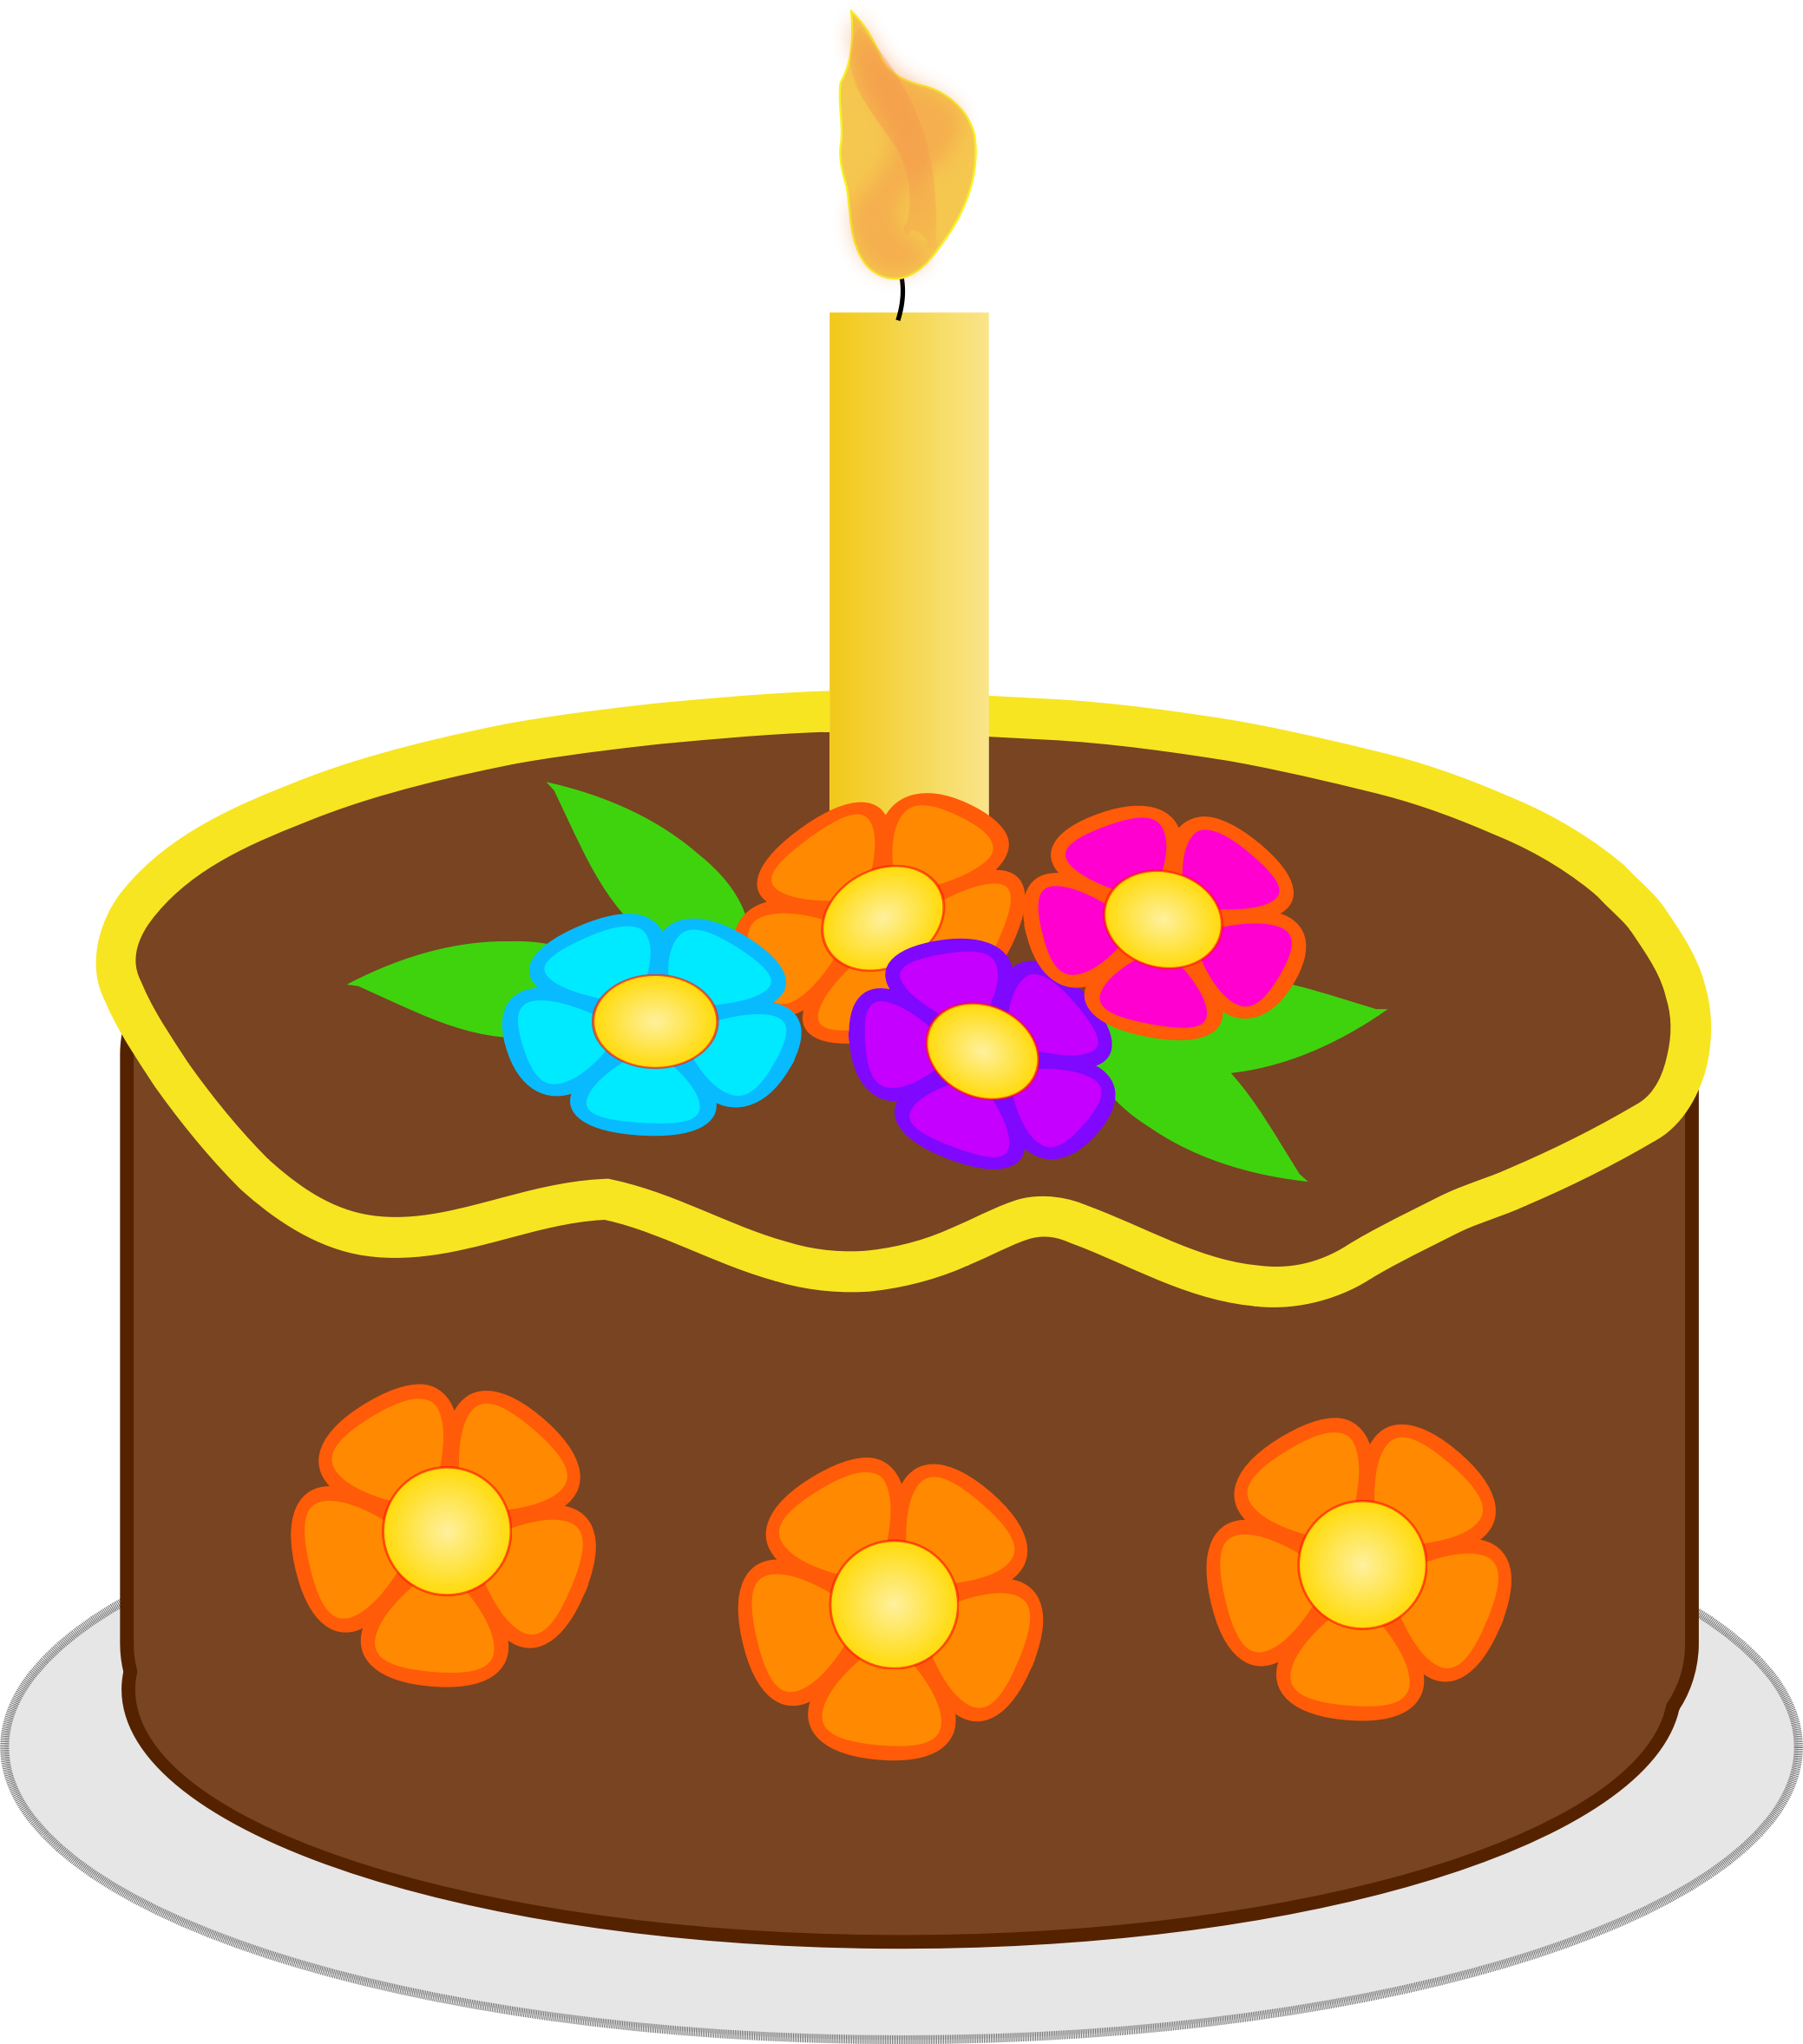 Chocolate Birthday Cake(brown) Clip arts